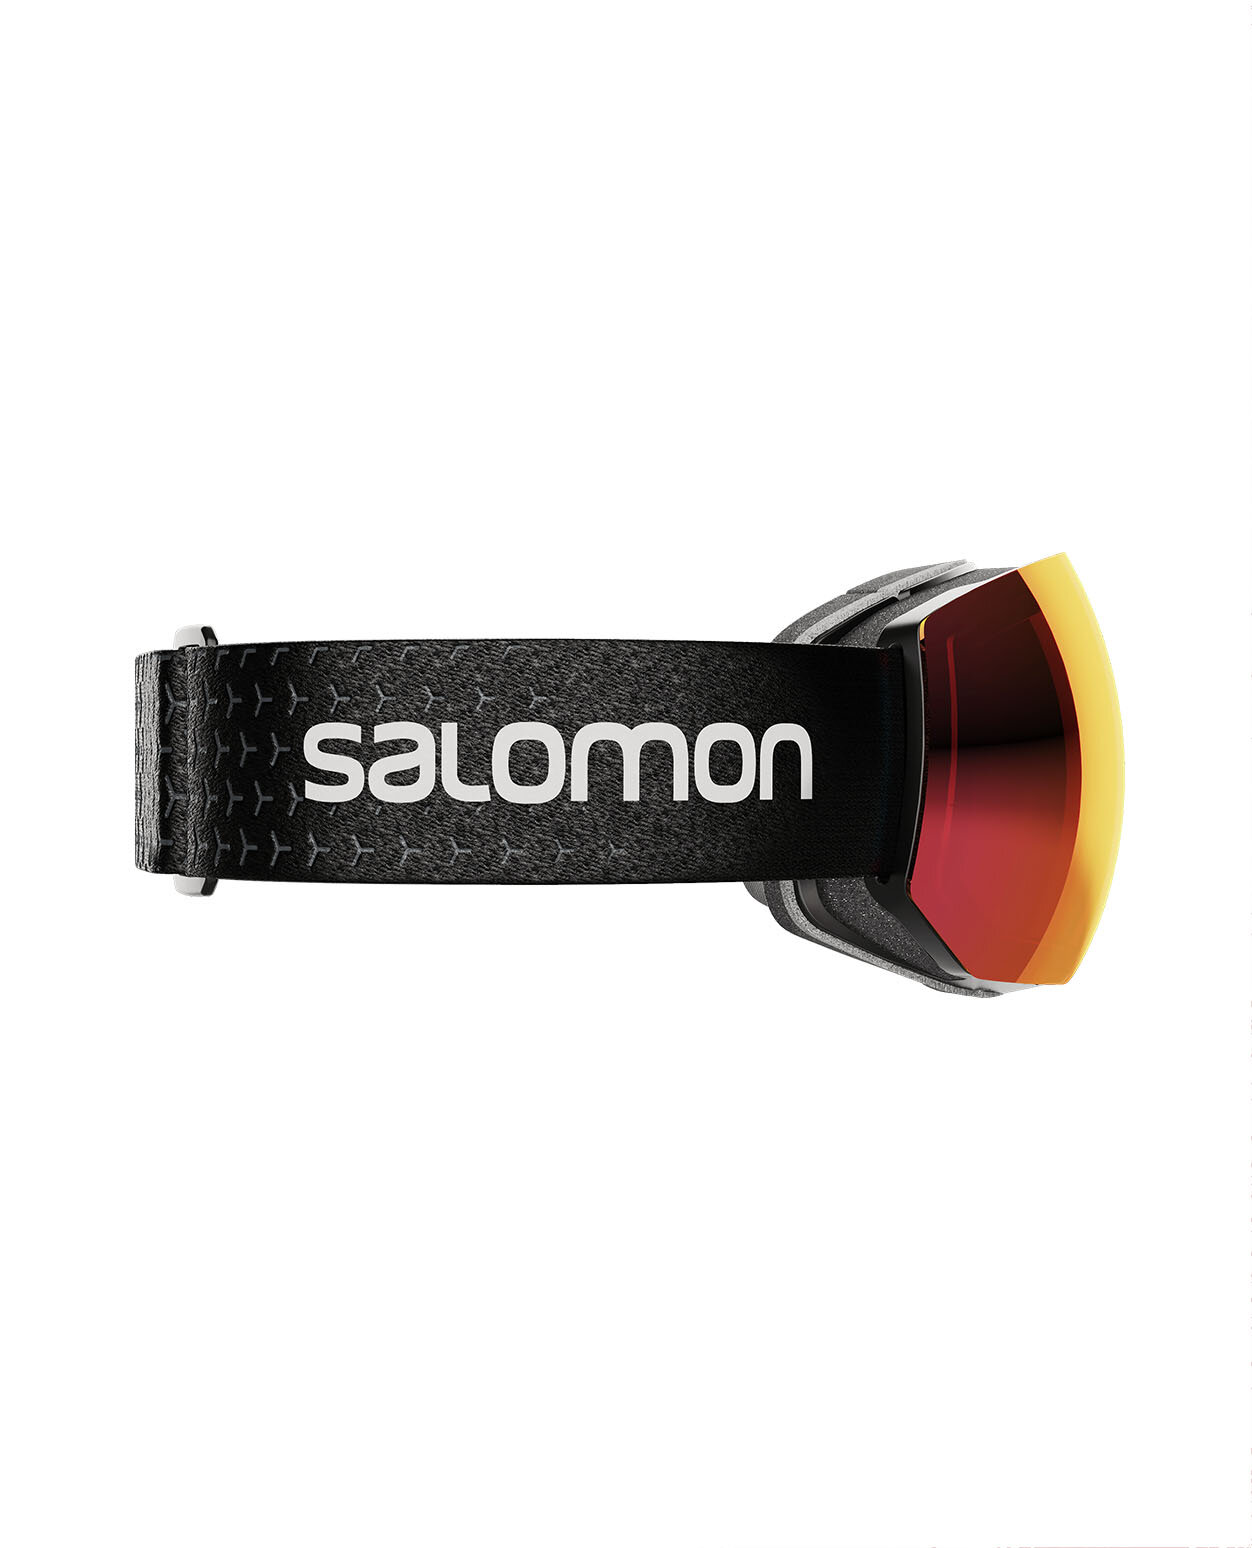 Salomon Radium Pro Sigma Black/Poppy Red